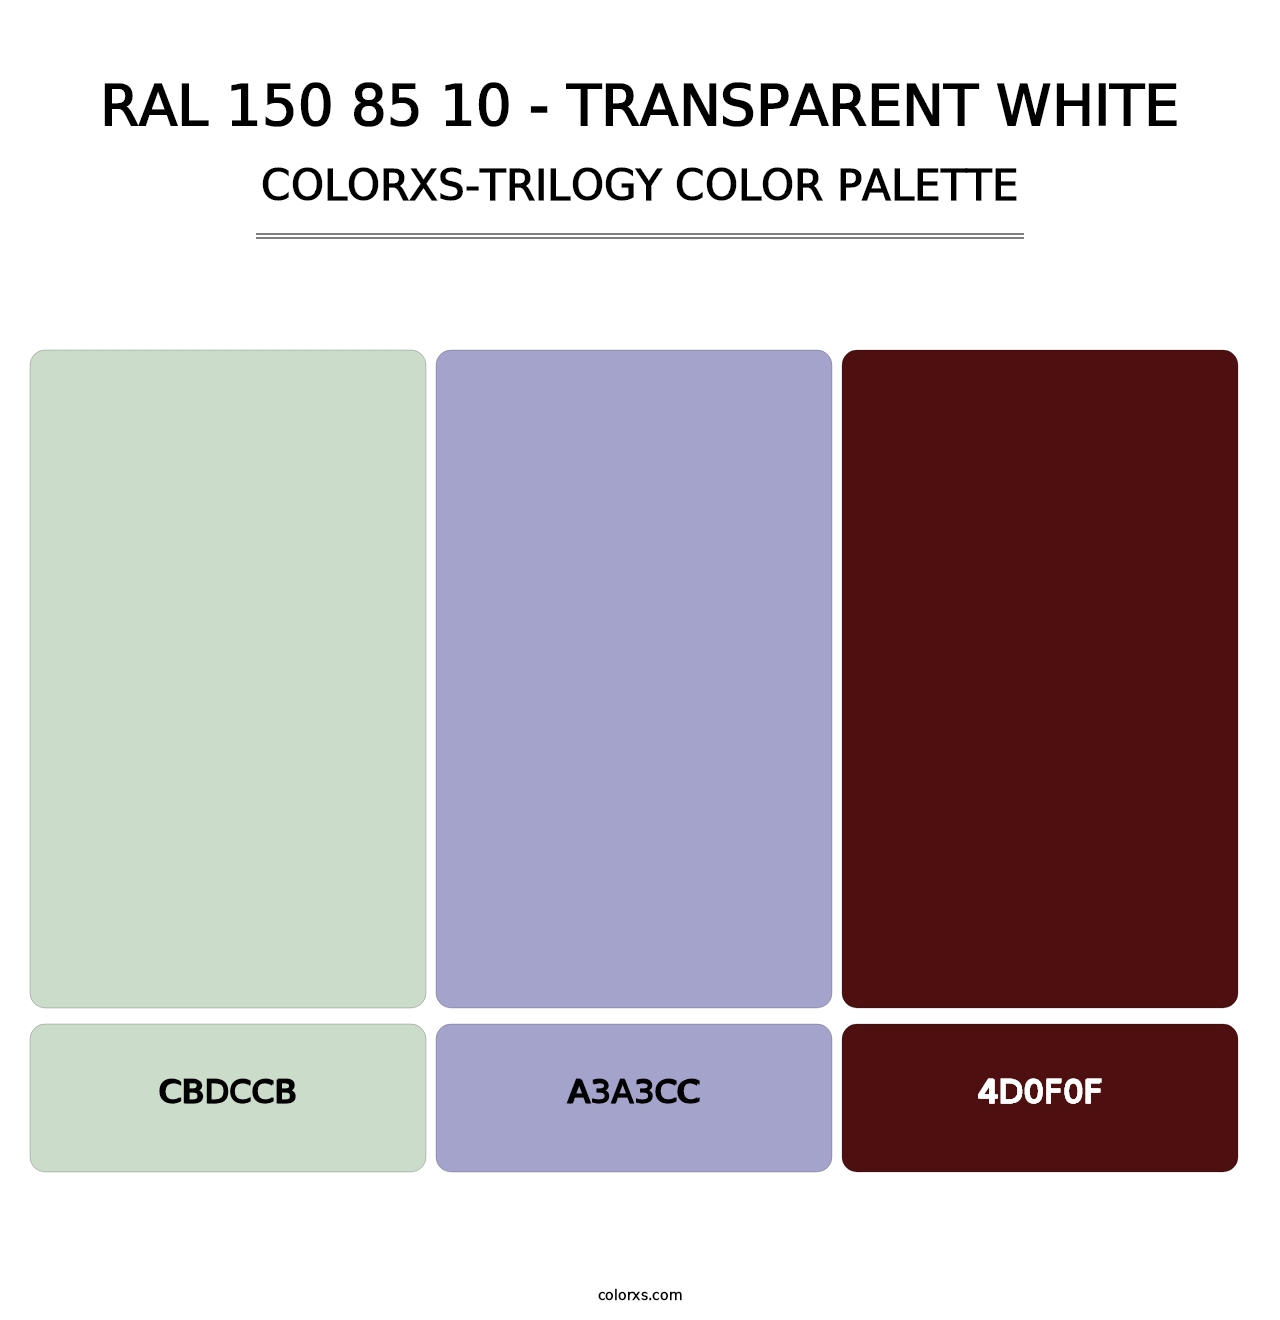 RAL 150 85 10 - Transparent White - Colorxs Trilogy Palette